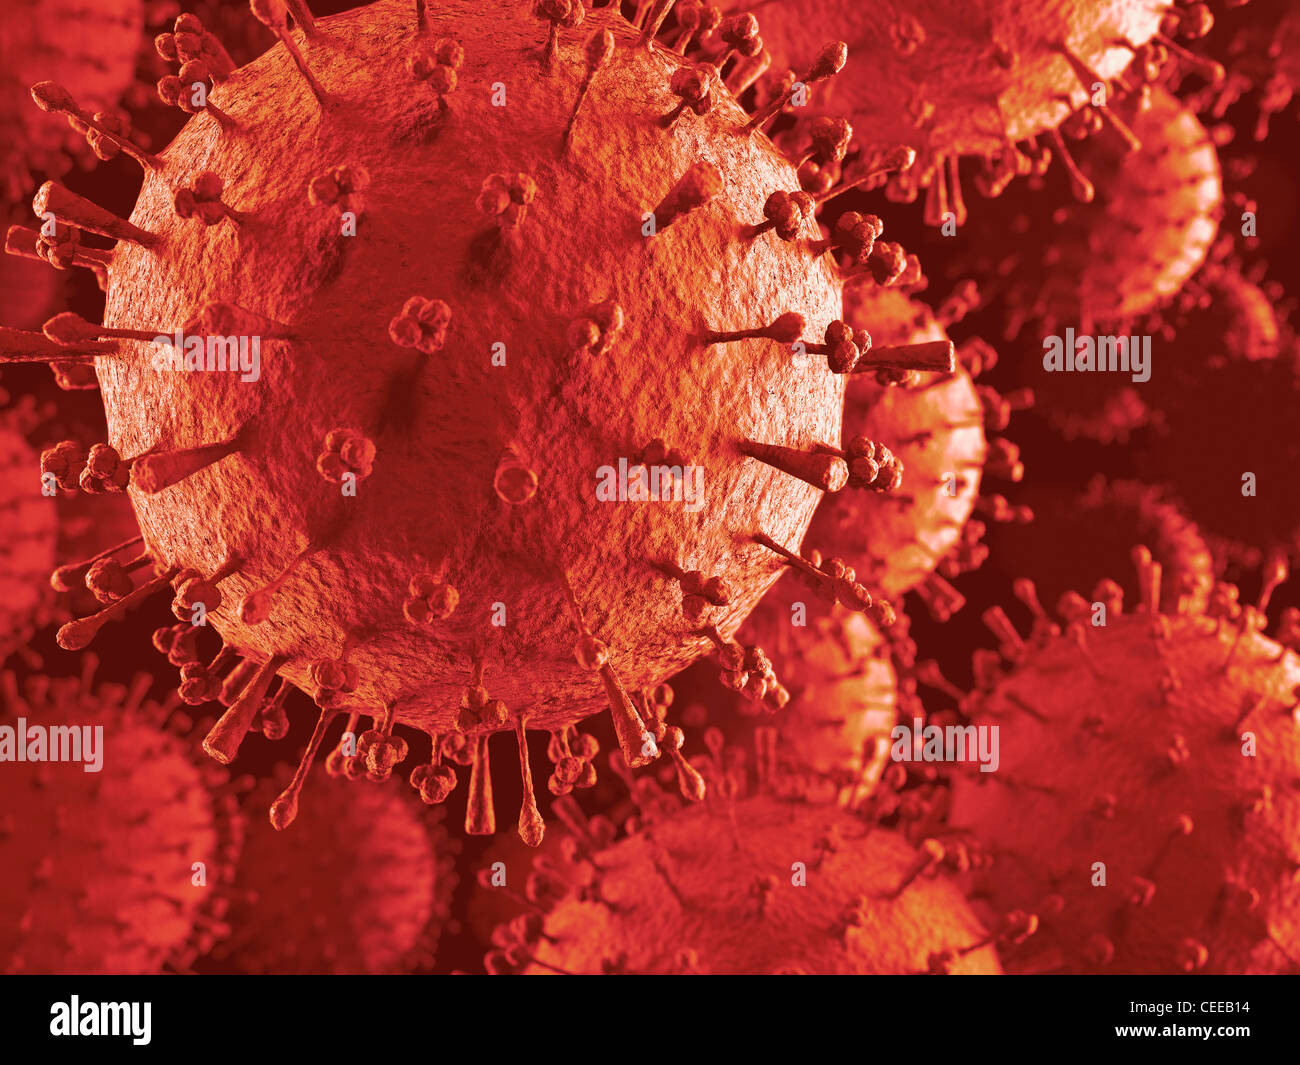 influenza A Flu virus H1N1 H5N1 particle cloud. Colored in red 3D illustration of spreading virus Swine flu, avian flu epidemic Stock Photo